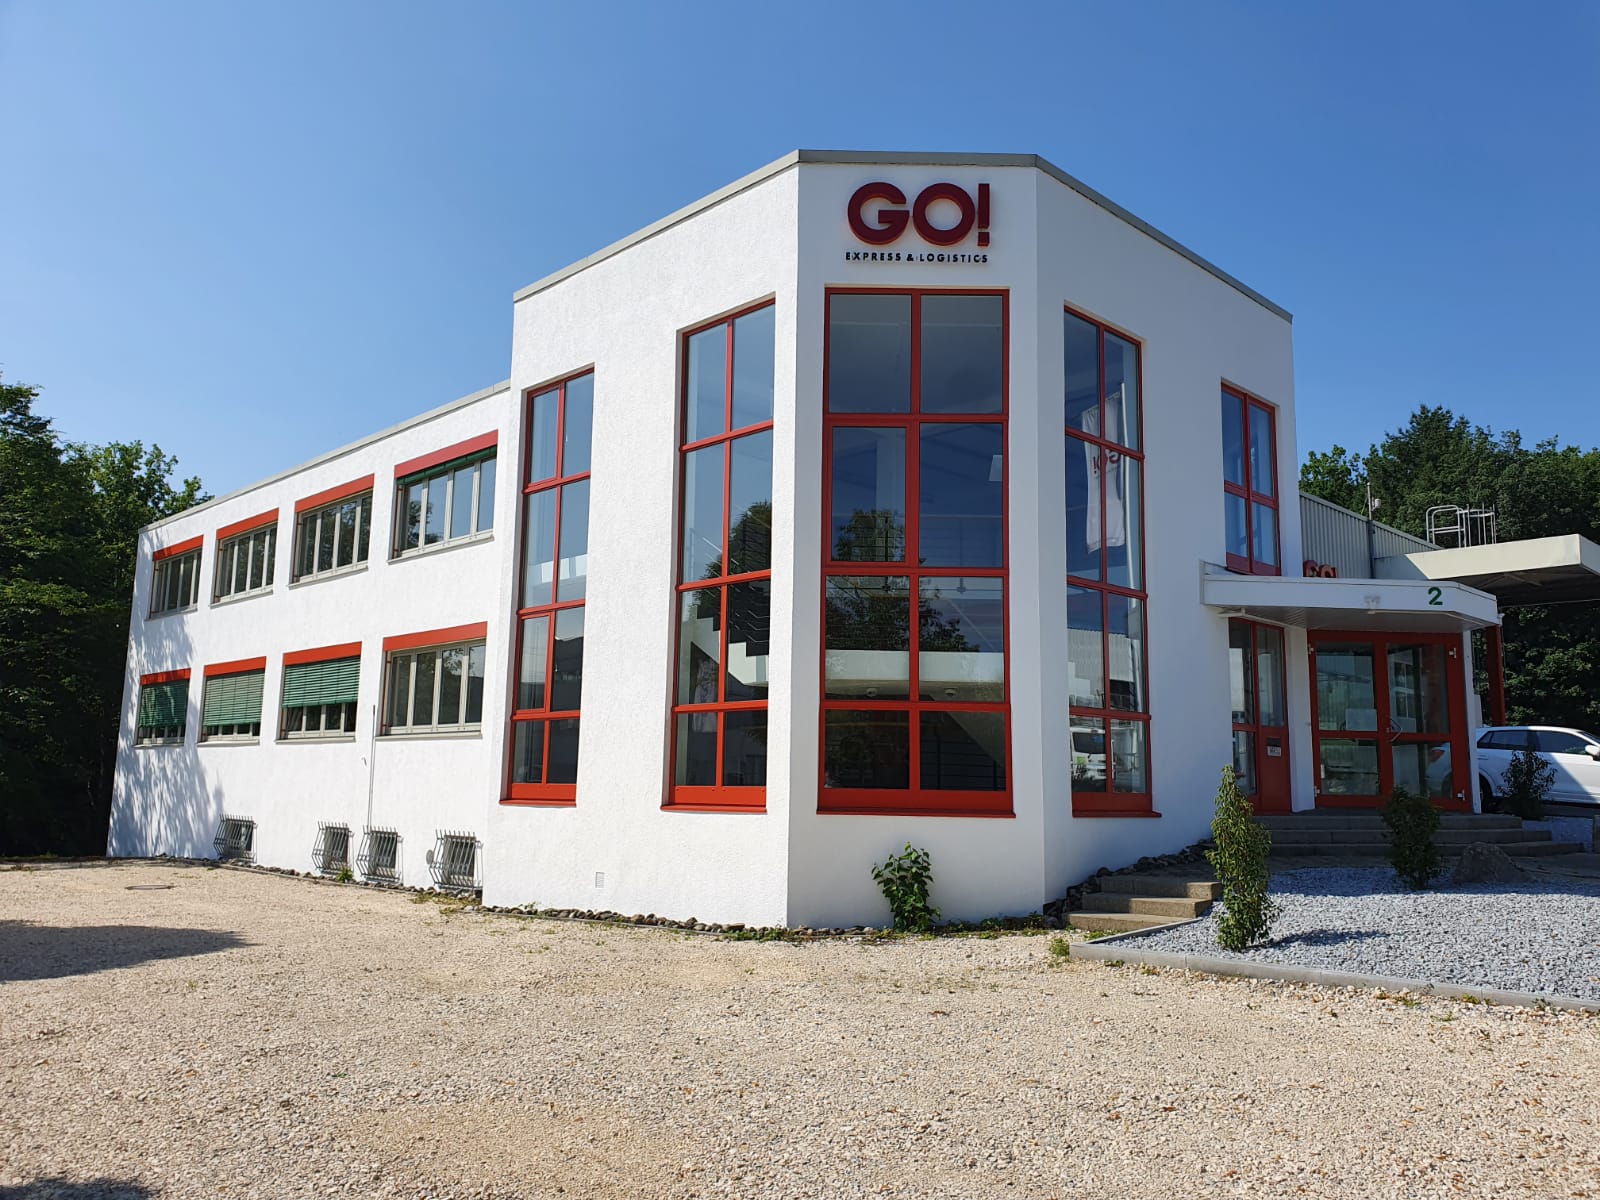 Bild 2 GO! Express & Logistics Südwest GmbH & Co. KG, Zweigniederlassung Tübingen in Reutlingen